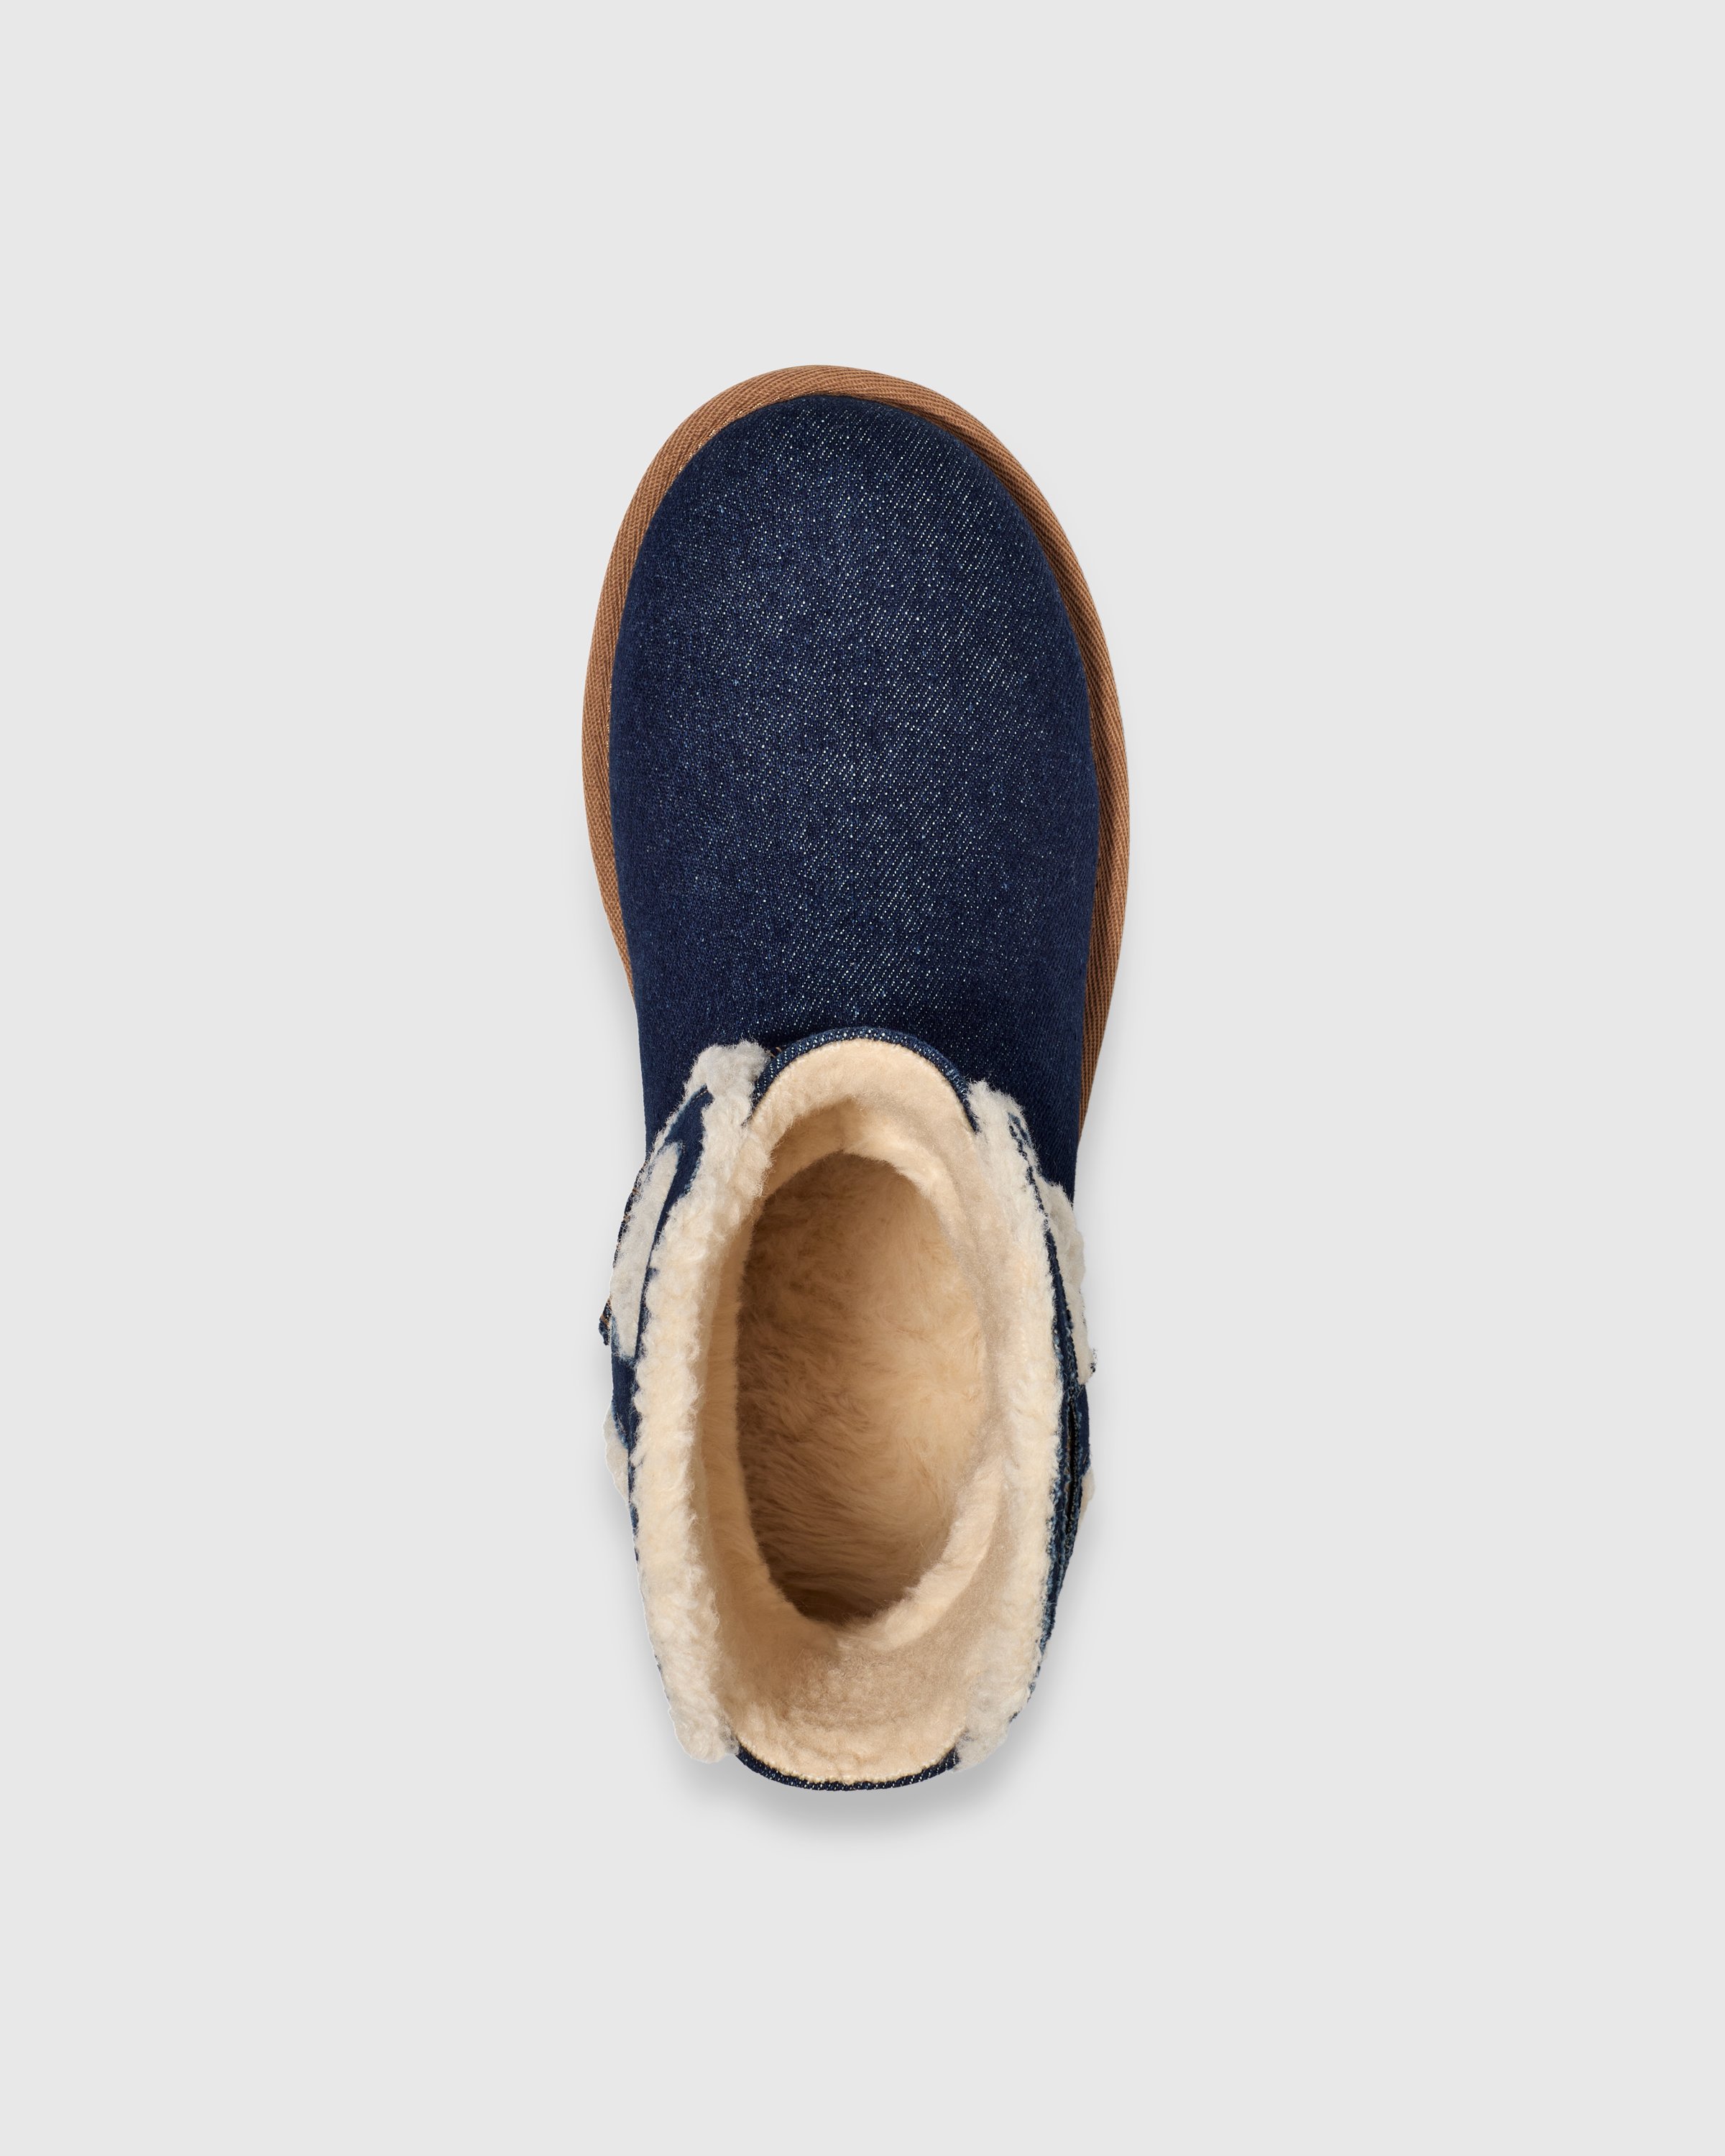 Ugg x Telfar - LOGO MINI BOOT 2 - Footwear - Blue - Image 3